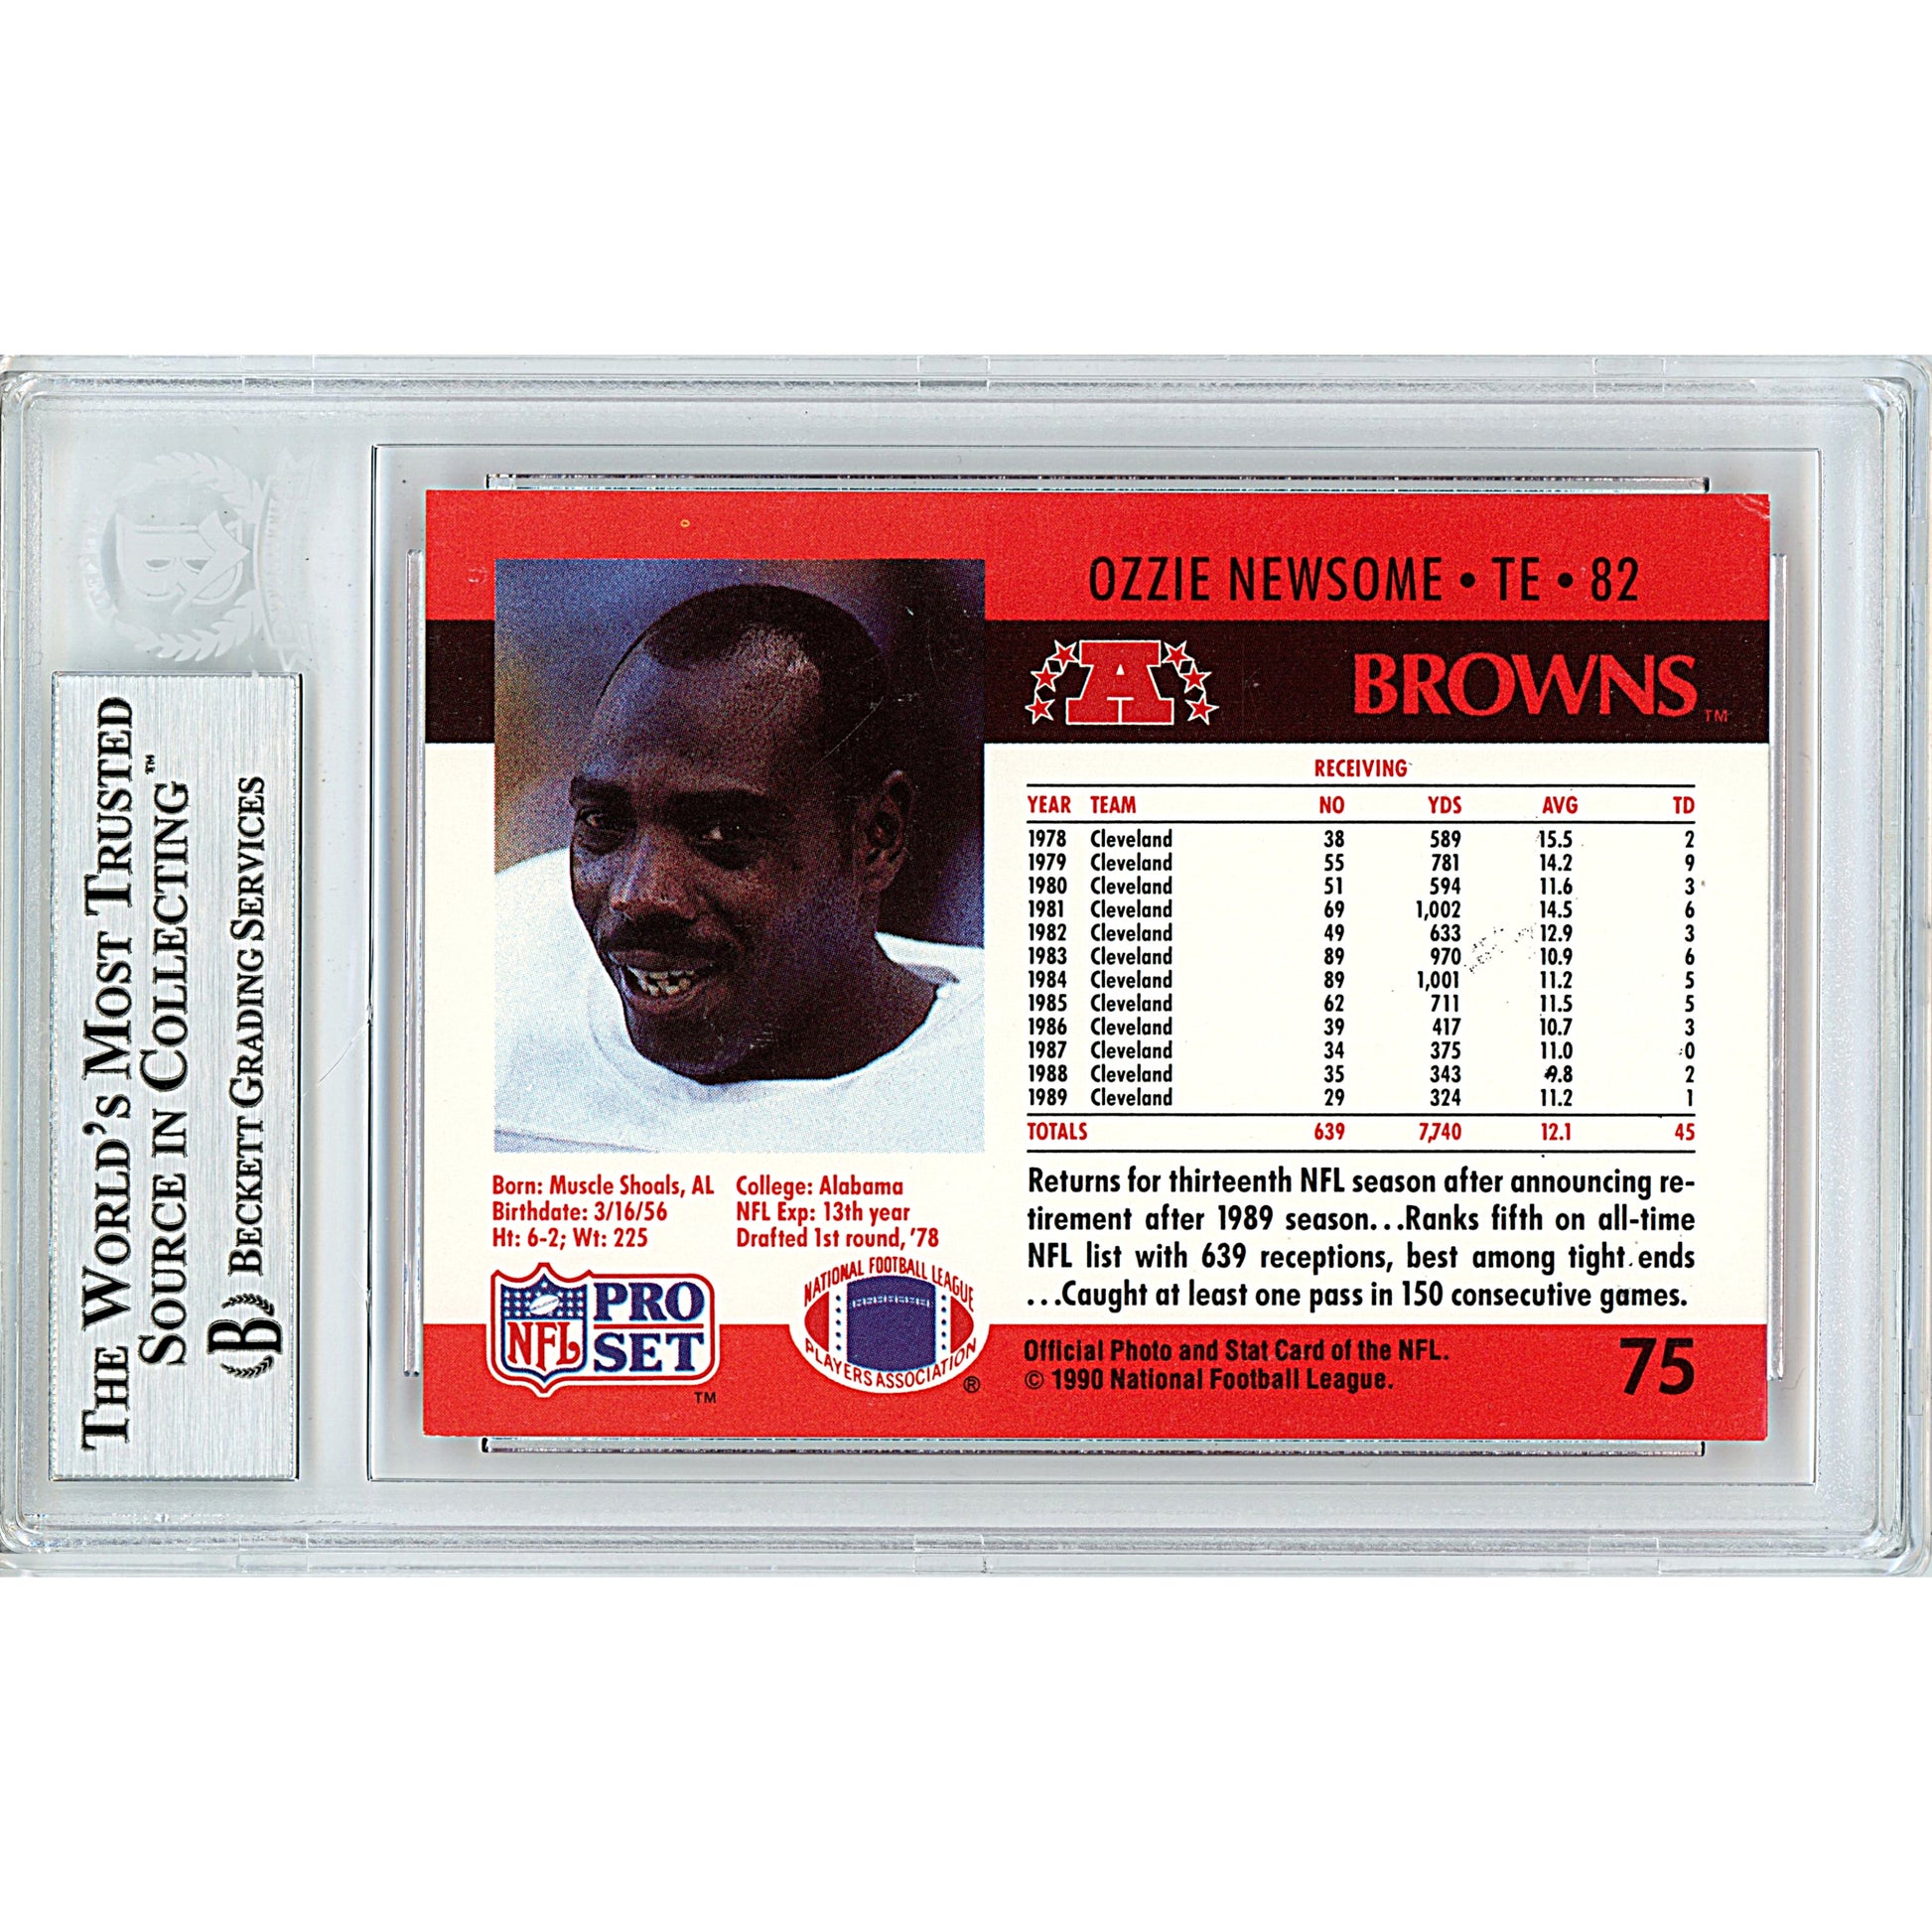 Footballs- Autographed- Ozzie Newsome Signed Cleveland Browns 1990 NFL Pro Set Football Card Beckett BAS Slabbed 00014225837 - 102